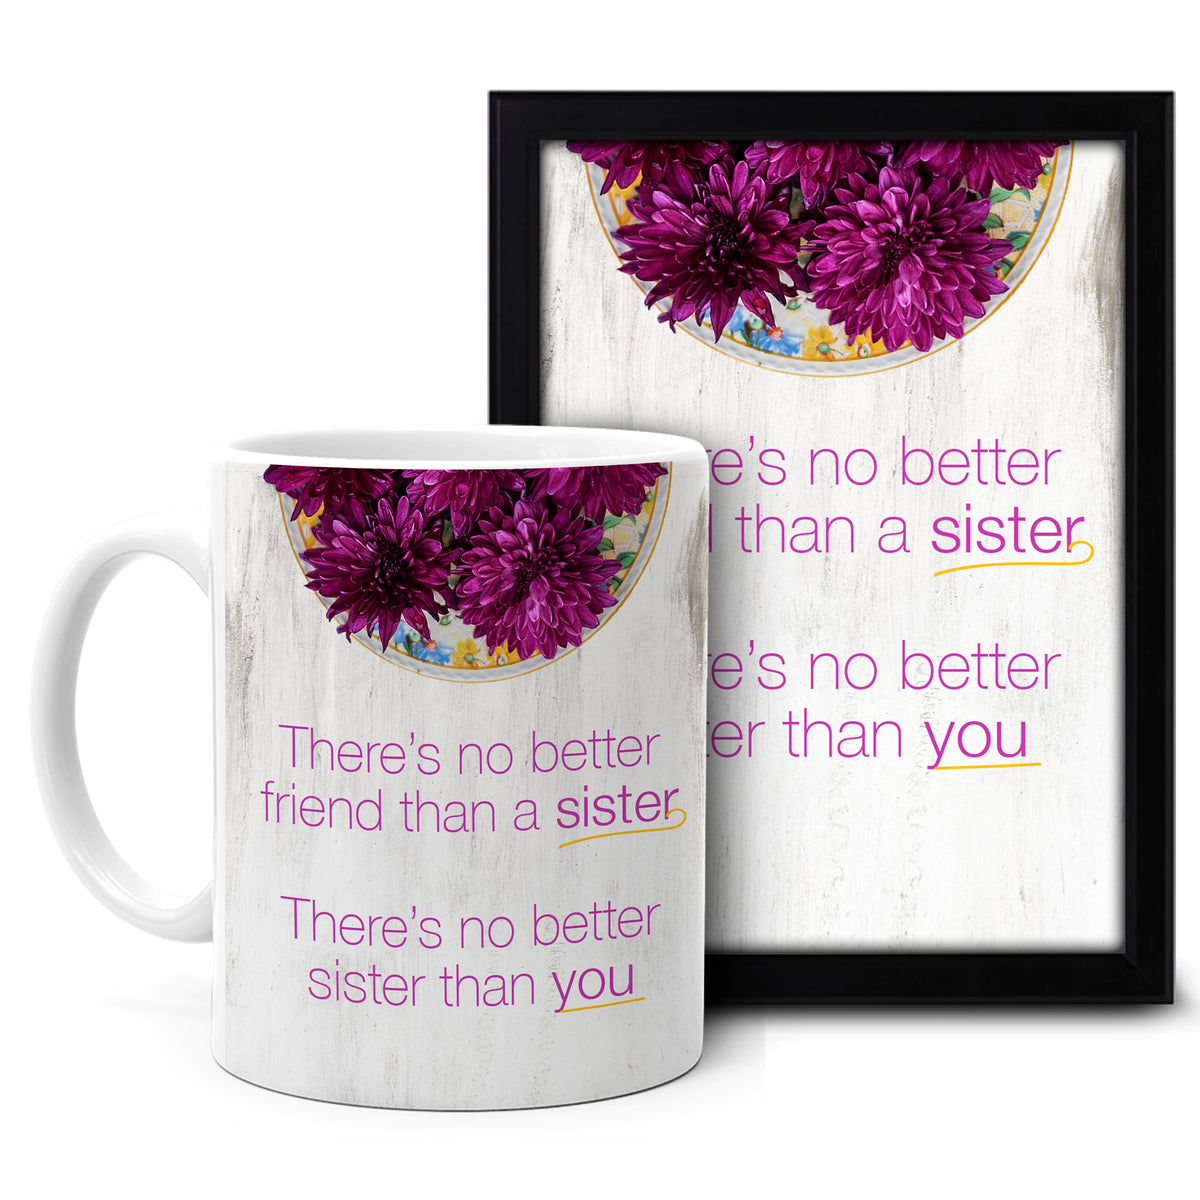 theres-no-better-friend-than-sister-ceramic-mug-photo-frame-1-pc